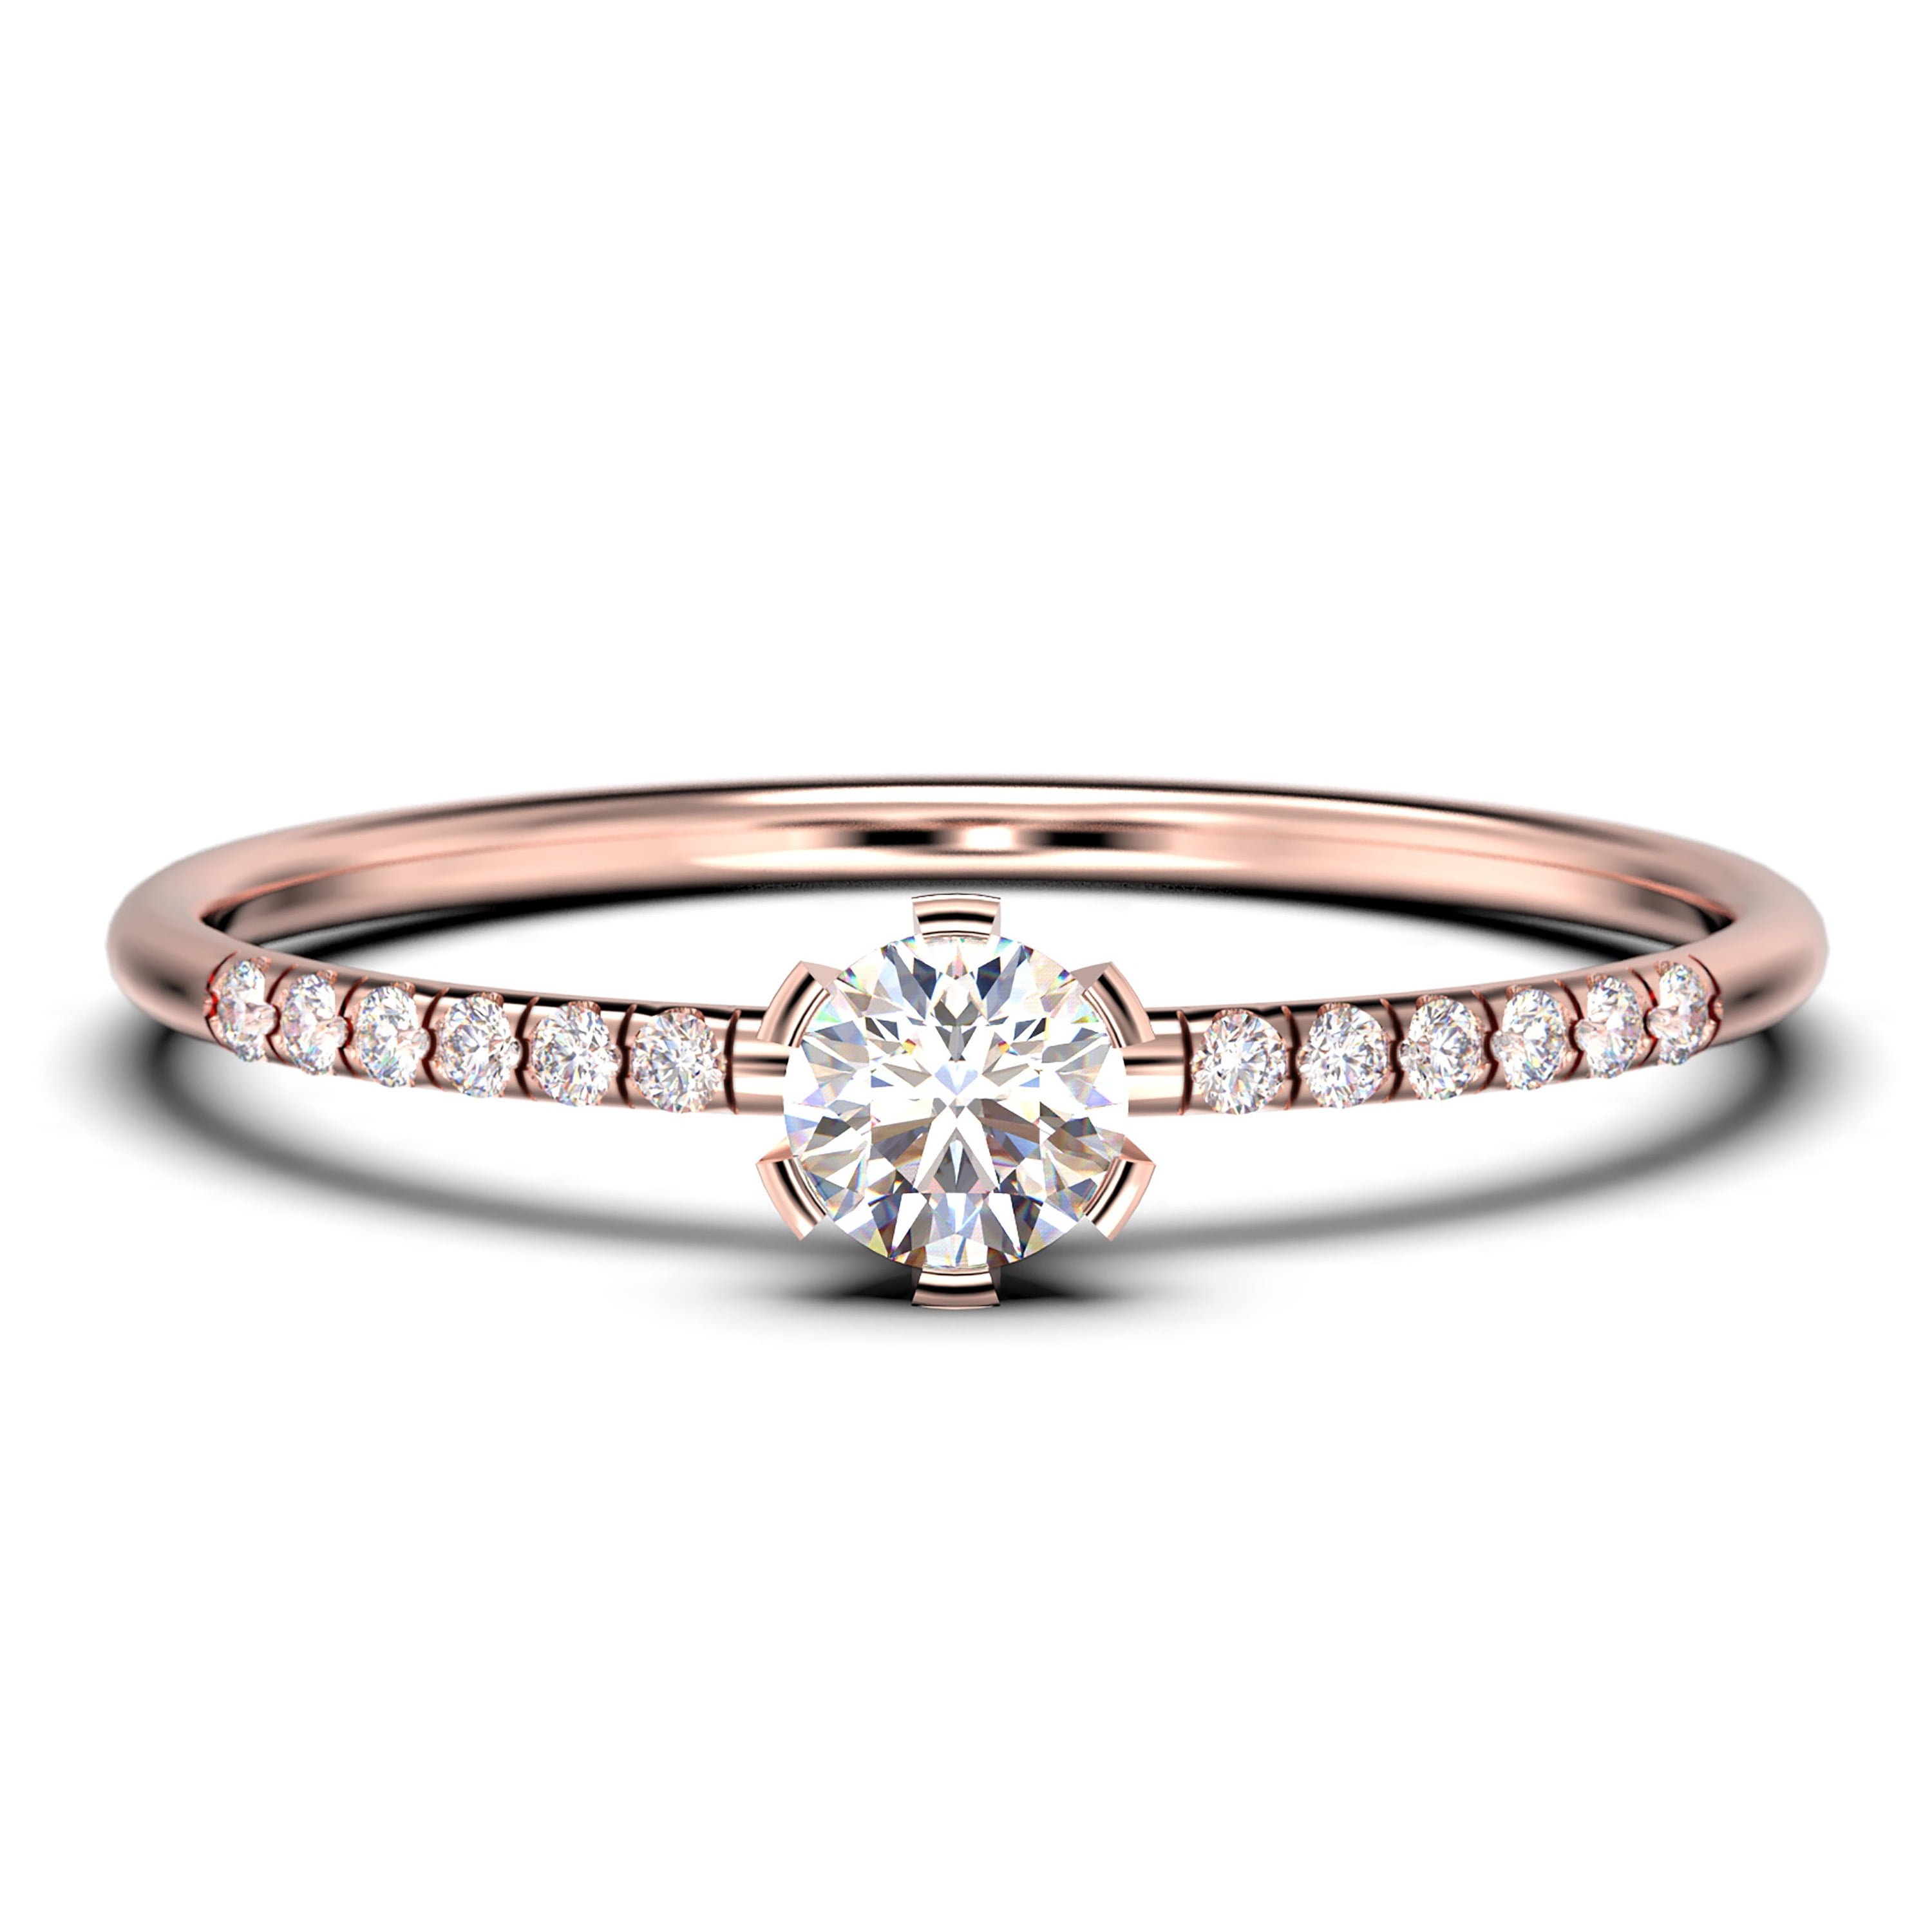 Details about   Vintage Art Deco Ring Filigree Engagement Wedding Ring 3Ct Diamond 14k Gold Over 